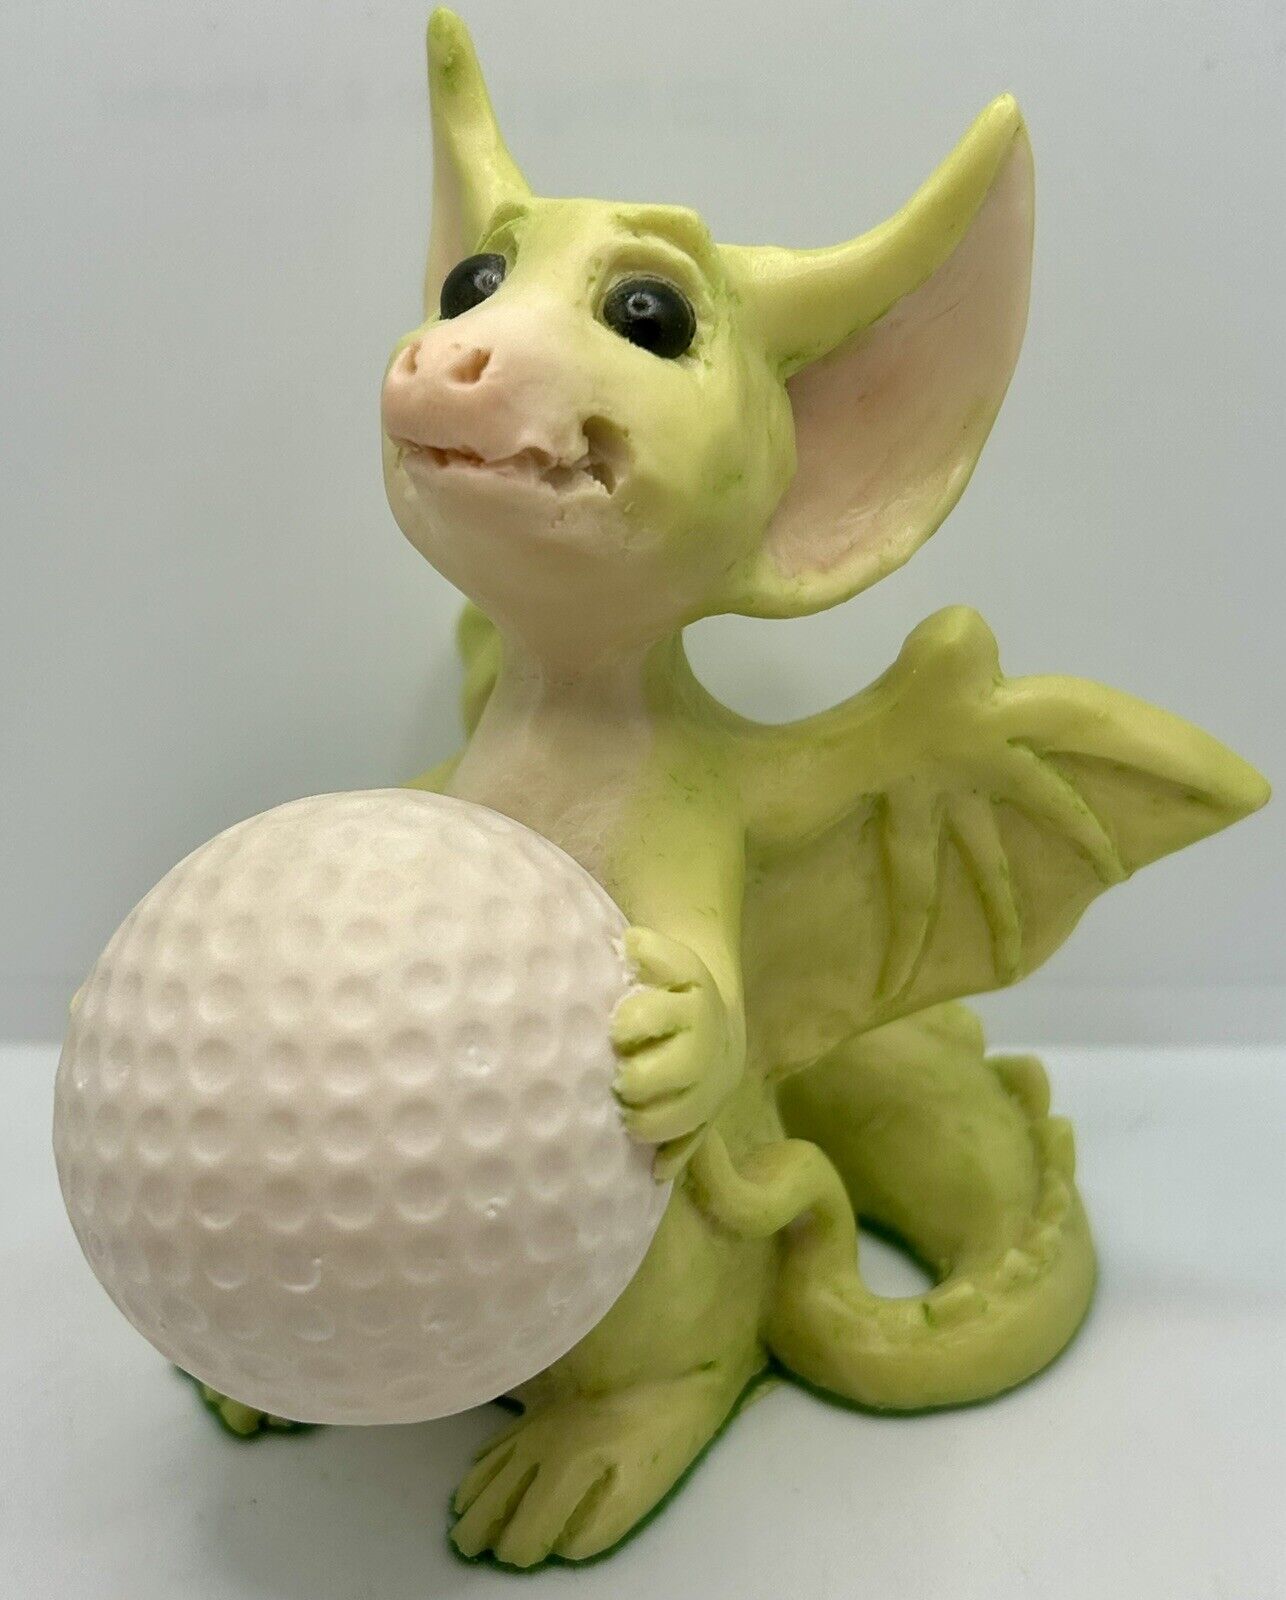 VTG Whimsical World Pocket Dragons “Putt Putt” Real Musgrave 1991 Golf Ball Mint